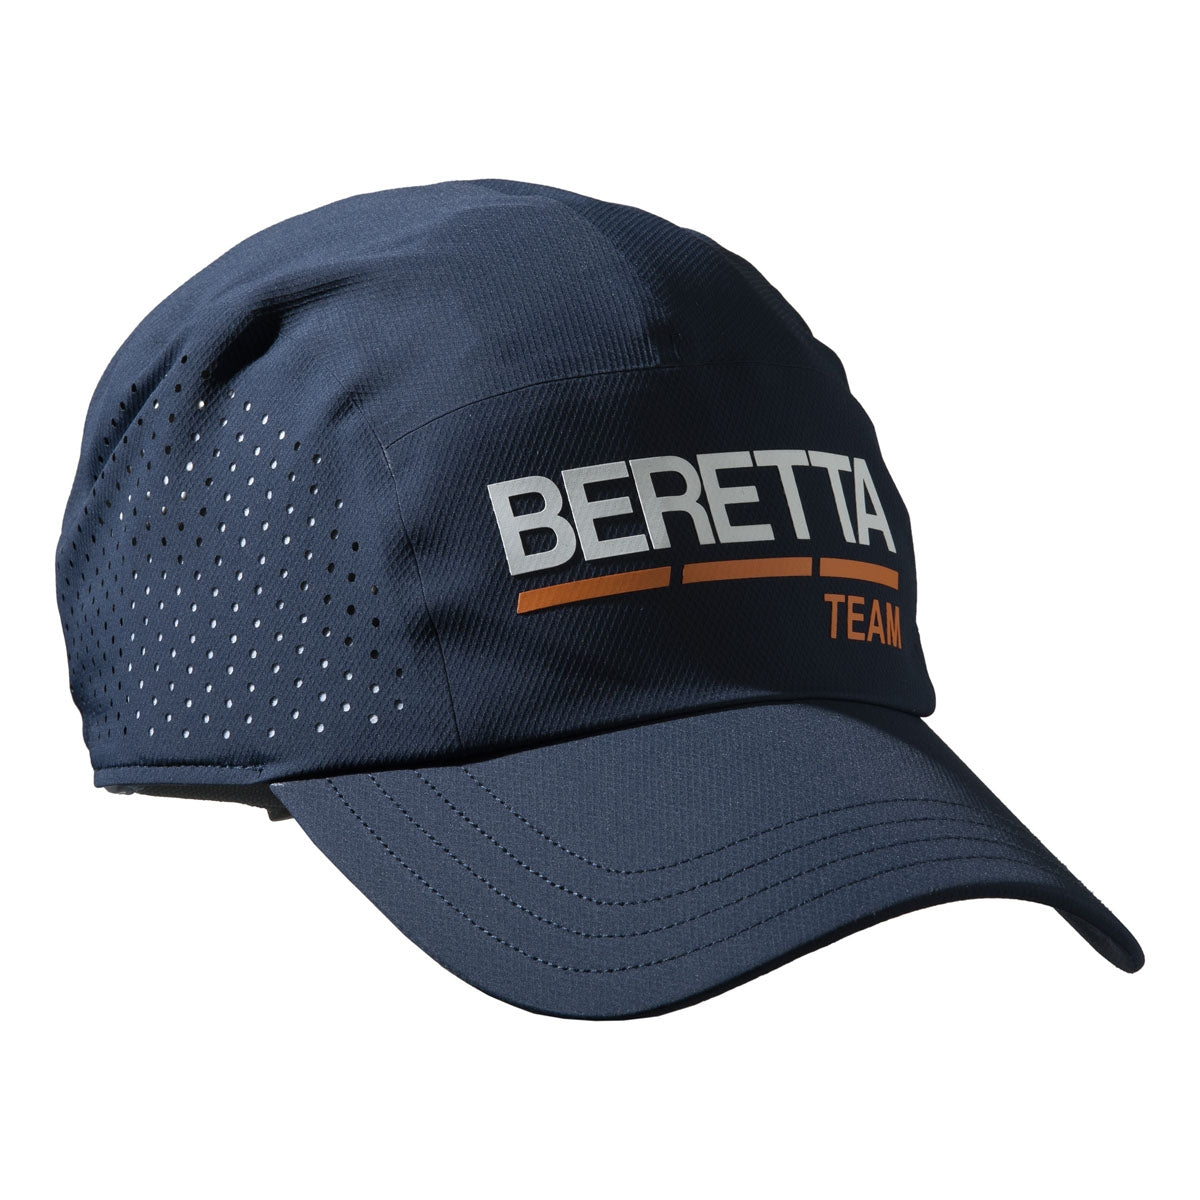 Beretta Team Cap - Navy